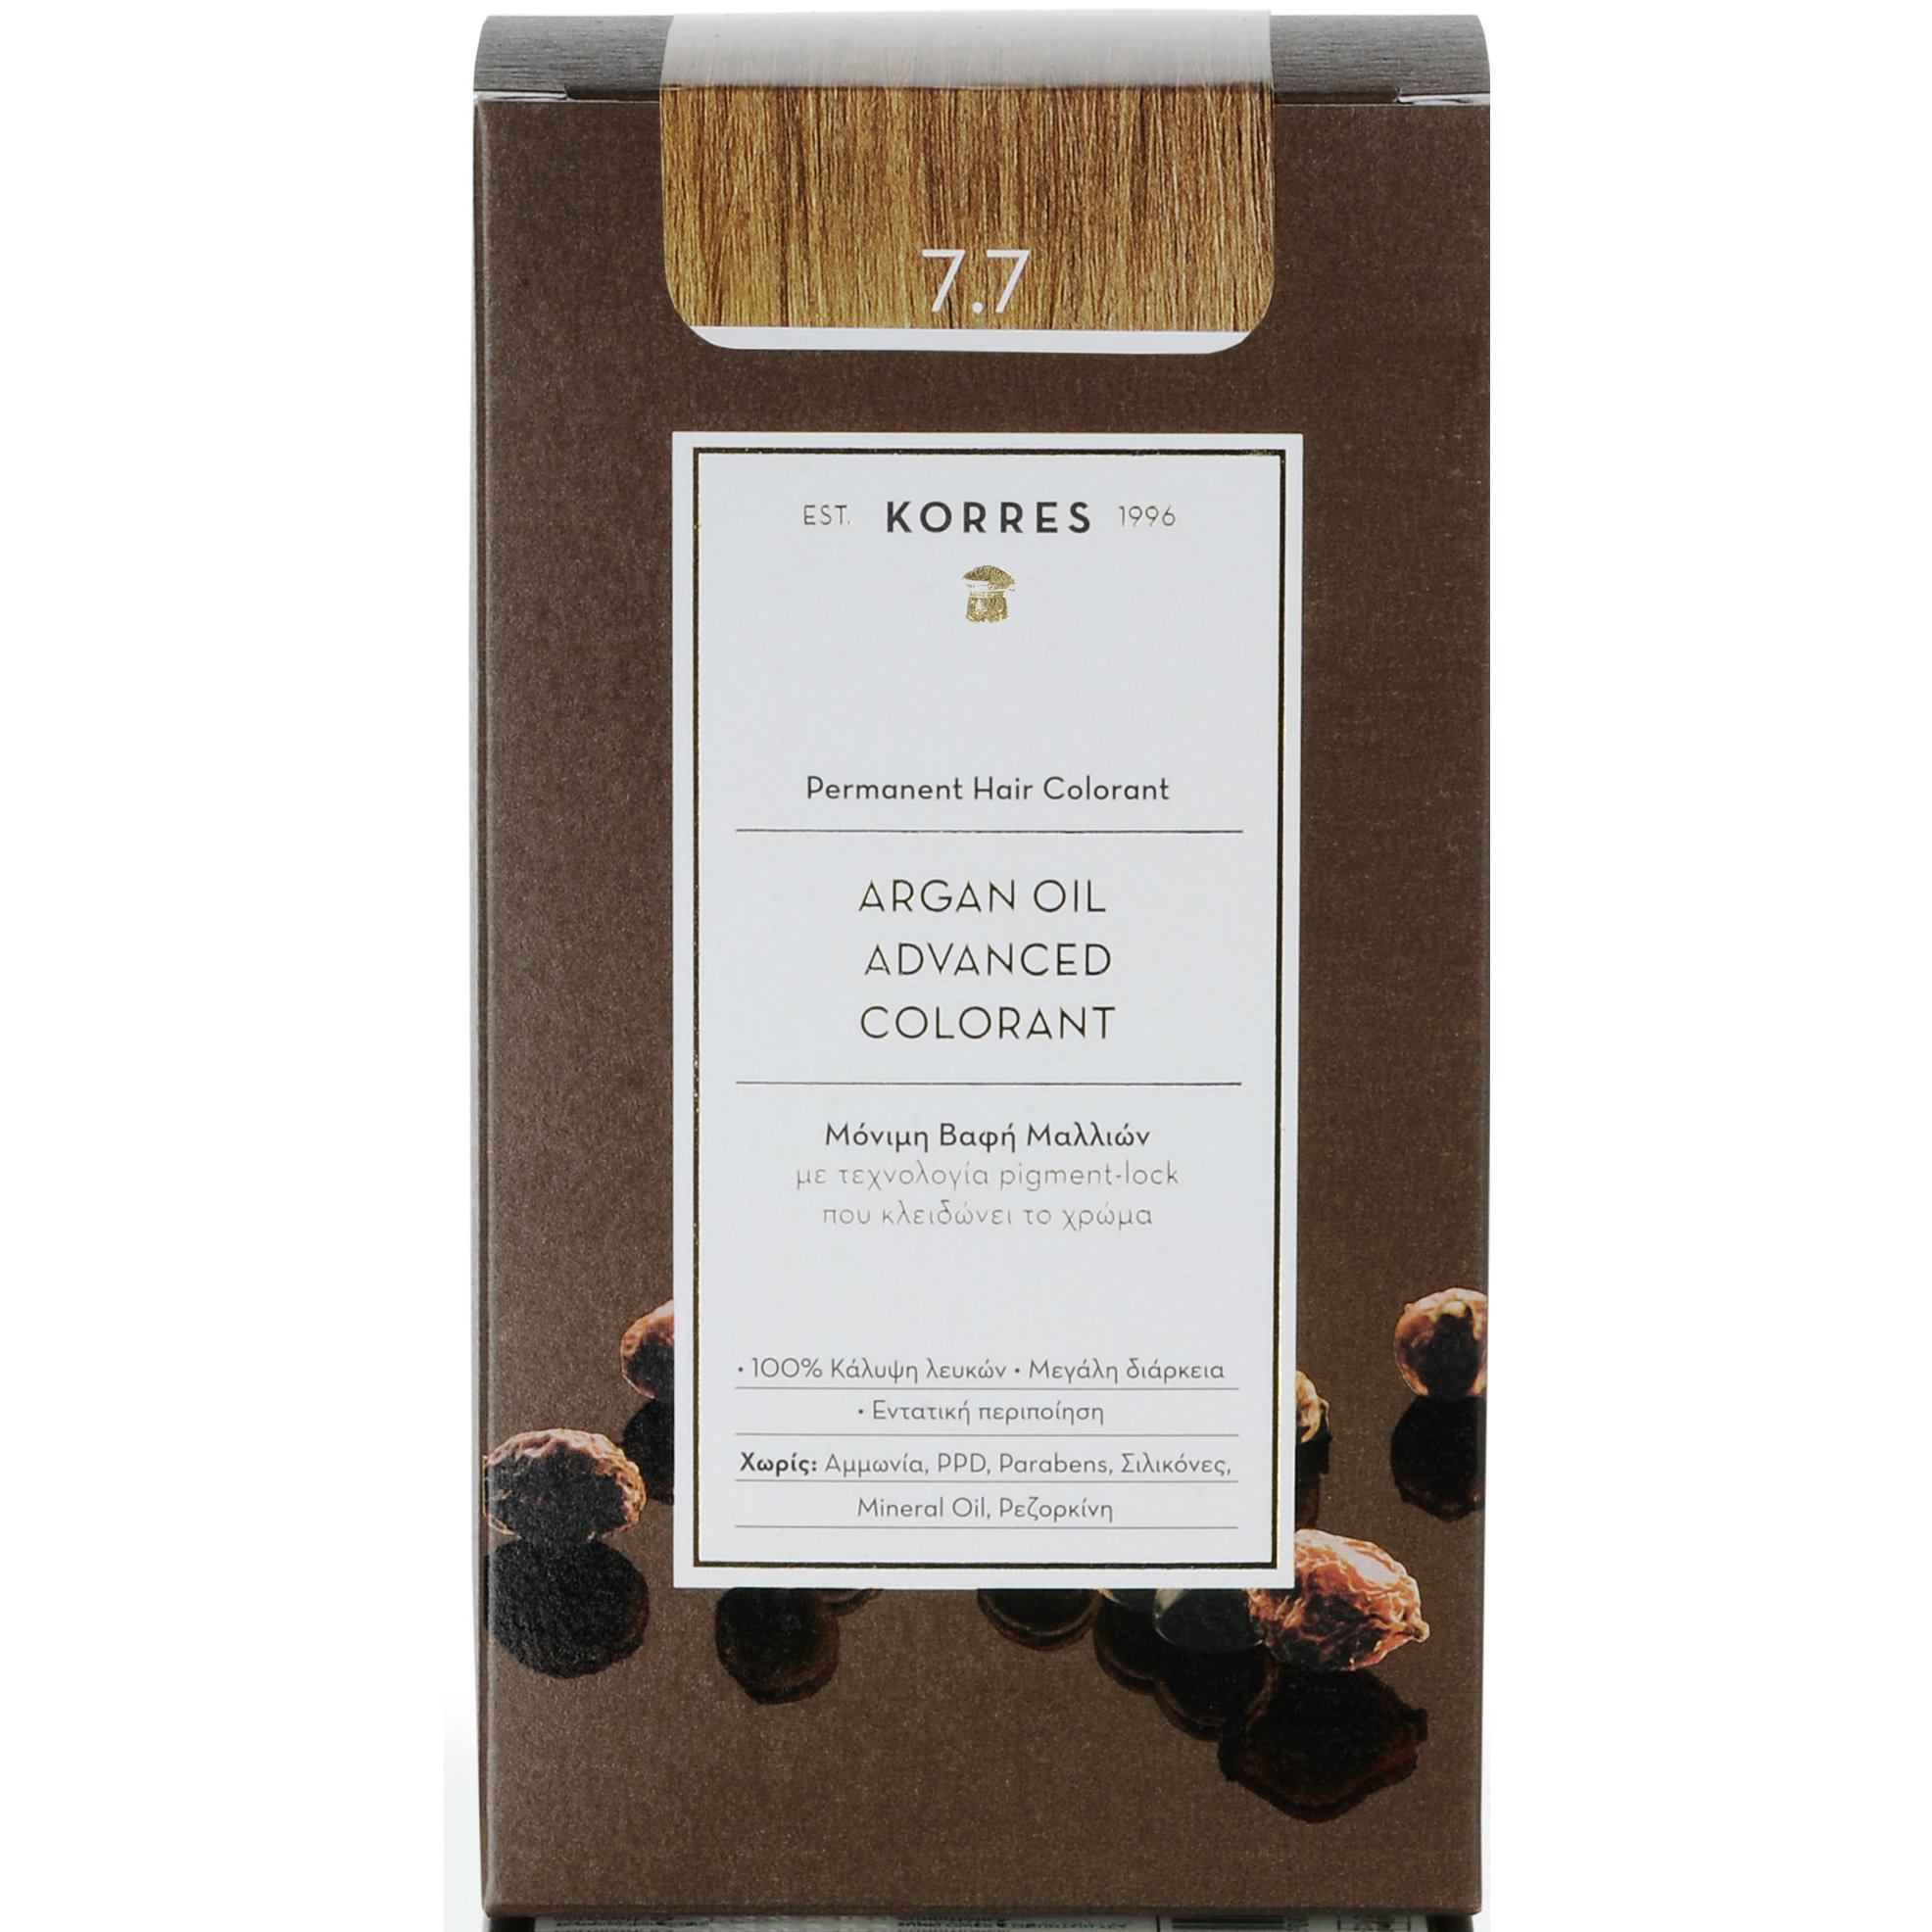 Korres Argan Oil Advanced Colorant Μόνιμη Βαφή Μαλλιών με Τεχνολογία Pigment-Lock που Κλειδώνει το Χρώμα 50ml – 7.7 ΜΟΚΑ